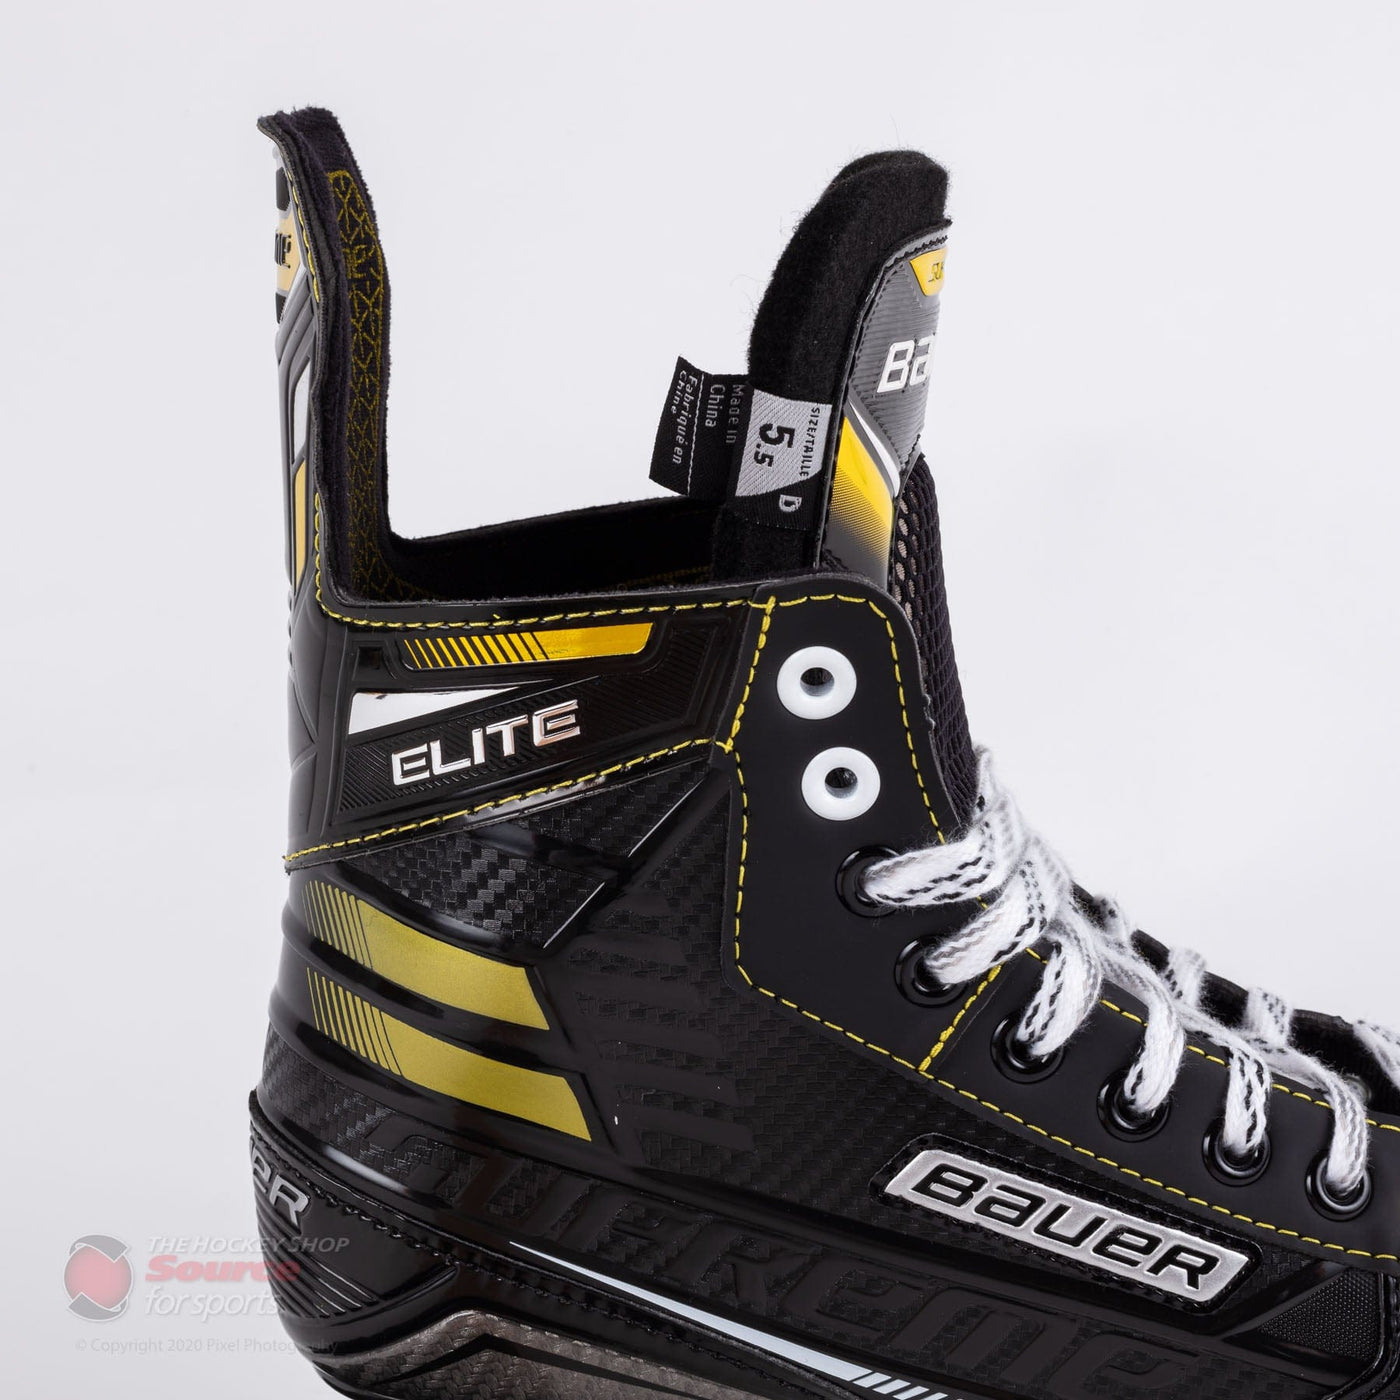 Bauer Supreme Elite Intermediate Hockey Skates (2020)